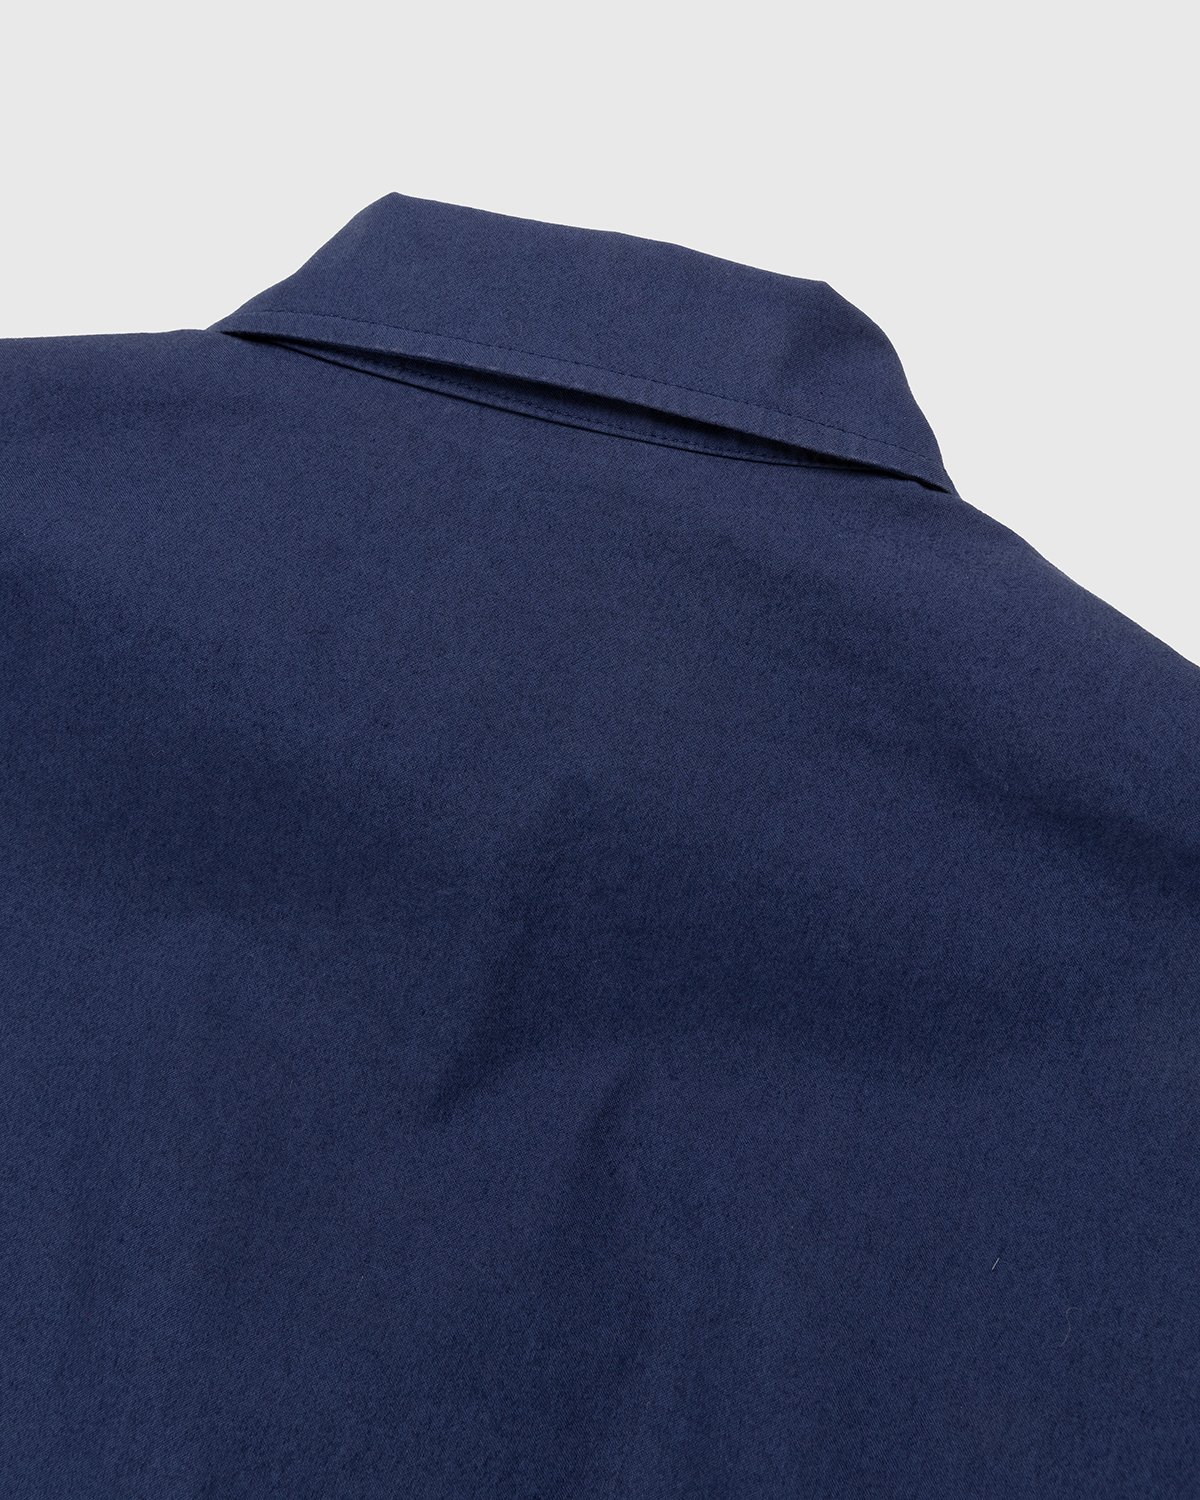 Jil Sander - Long Sleeve Work Shirt Navy - Clothing - Blue - Image 3